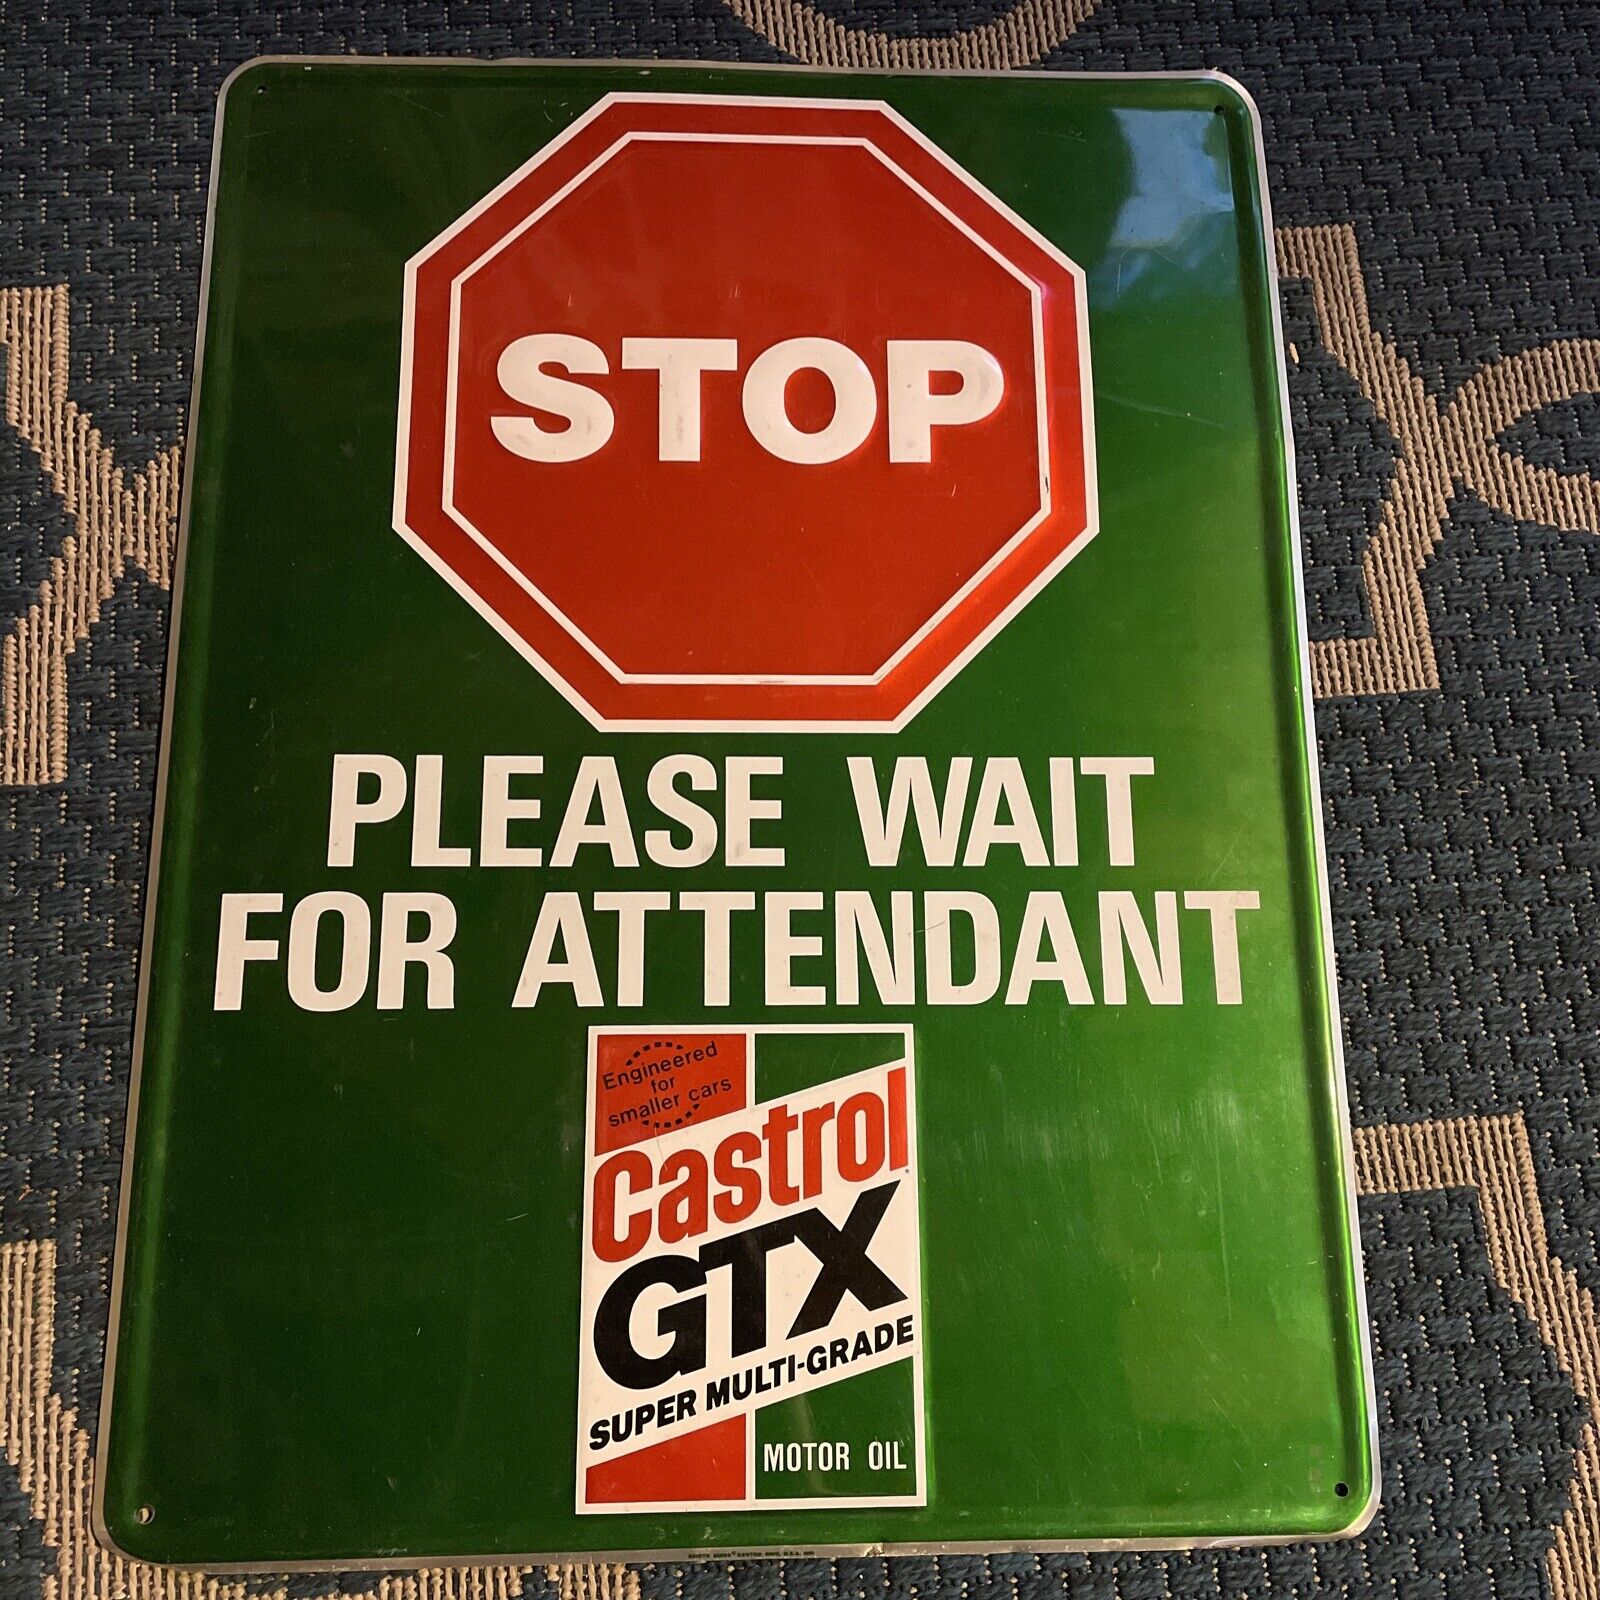 Castrol Gtx Motor Oil Metal Advertising Sign “stop Please Wait For Attendant”